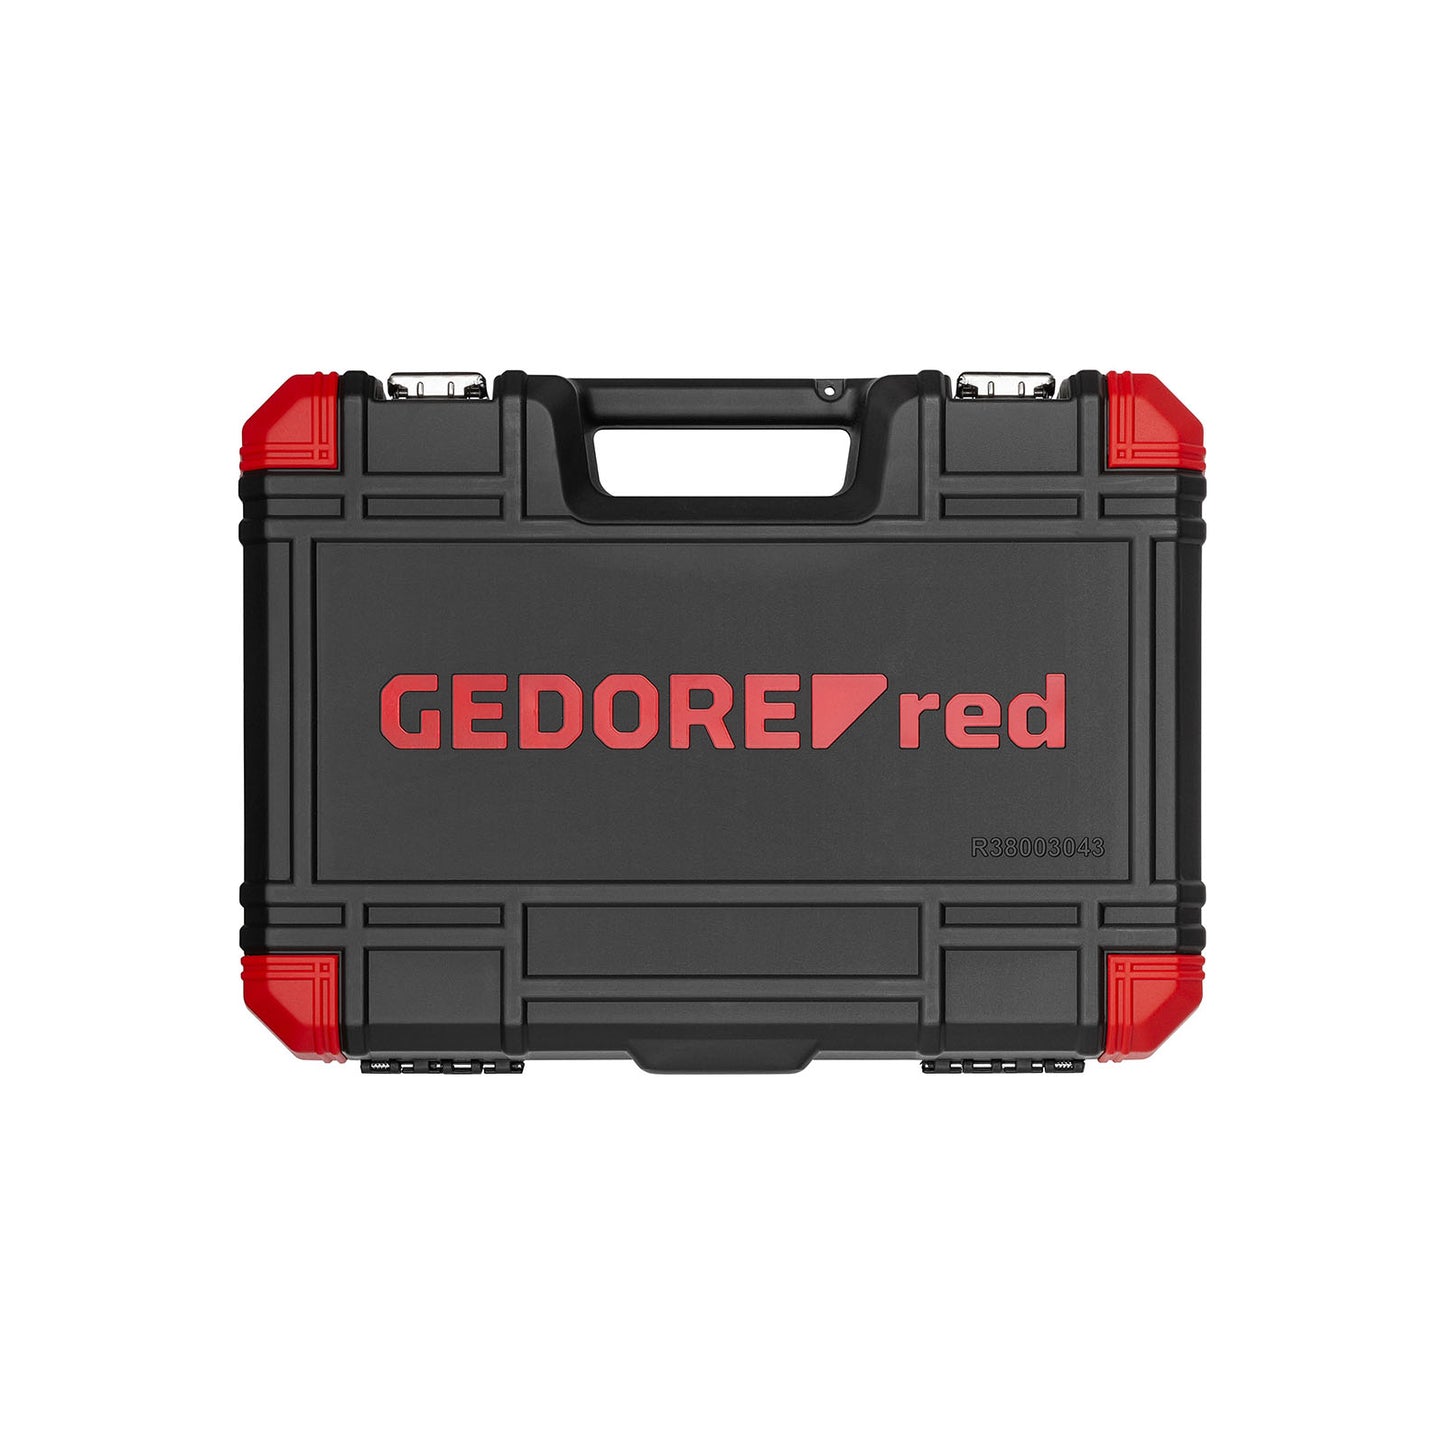 GEDORE red R38003043 - Multipurpose tool set, 43 pieces (3300190)